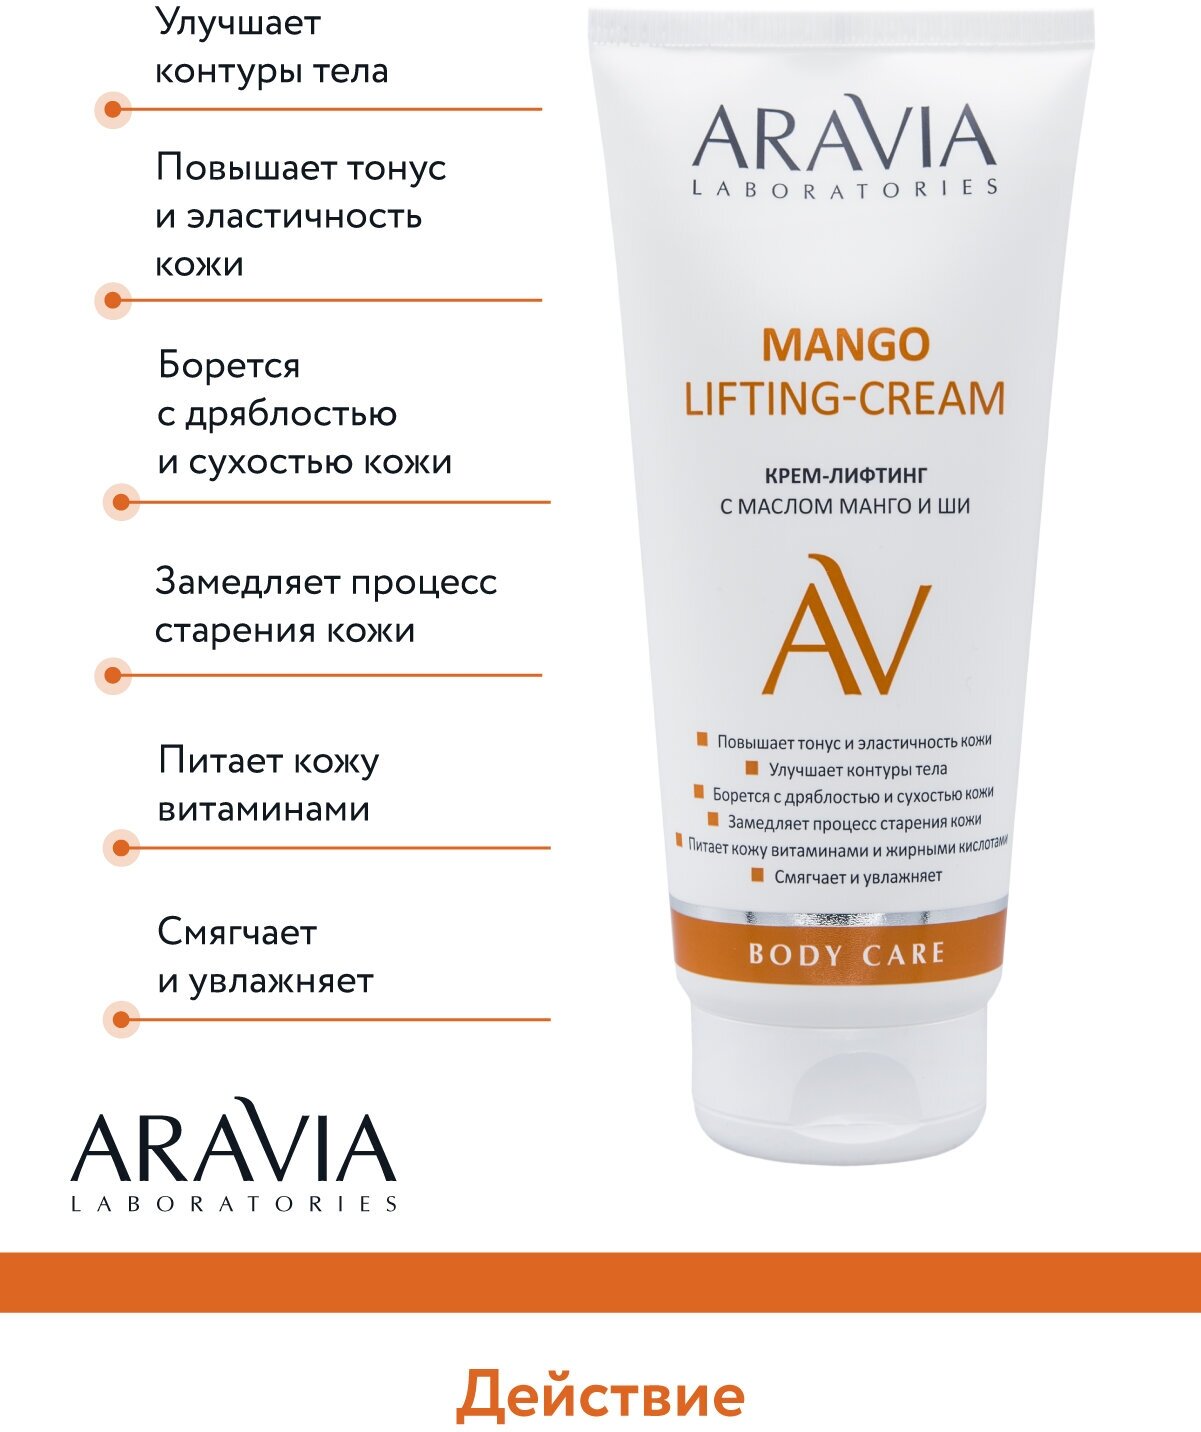 ARAVIA Крем-лифтин для тела г с маслом манго и ши Mango Lifting-Cream, 200 мл